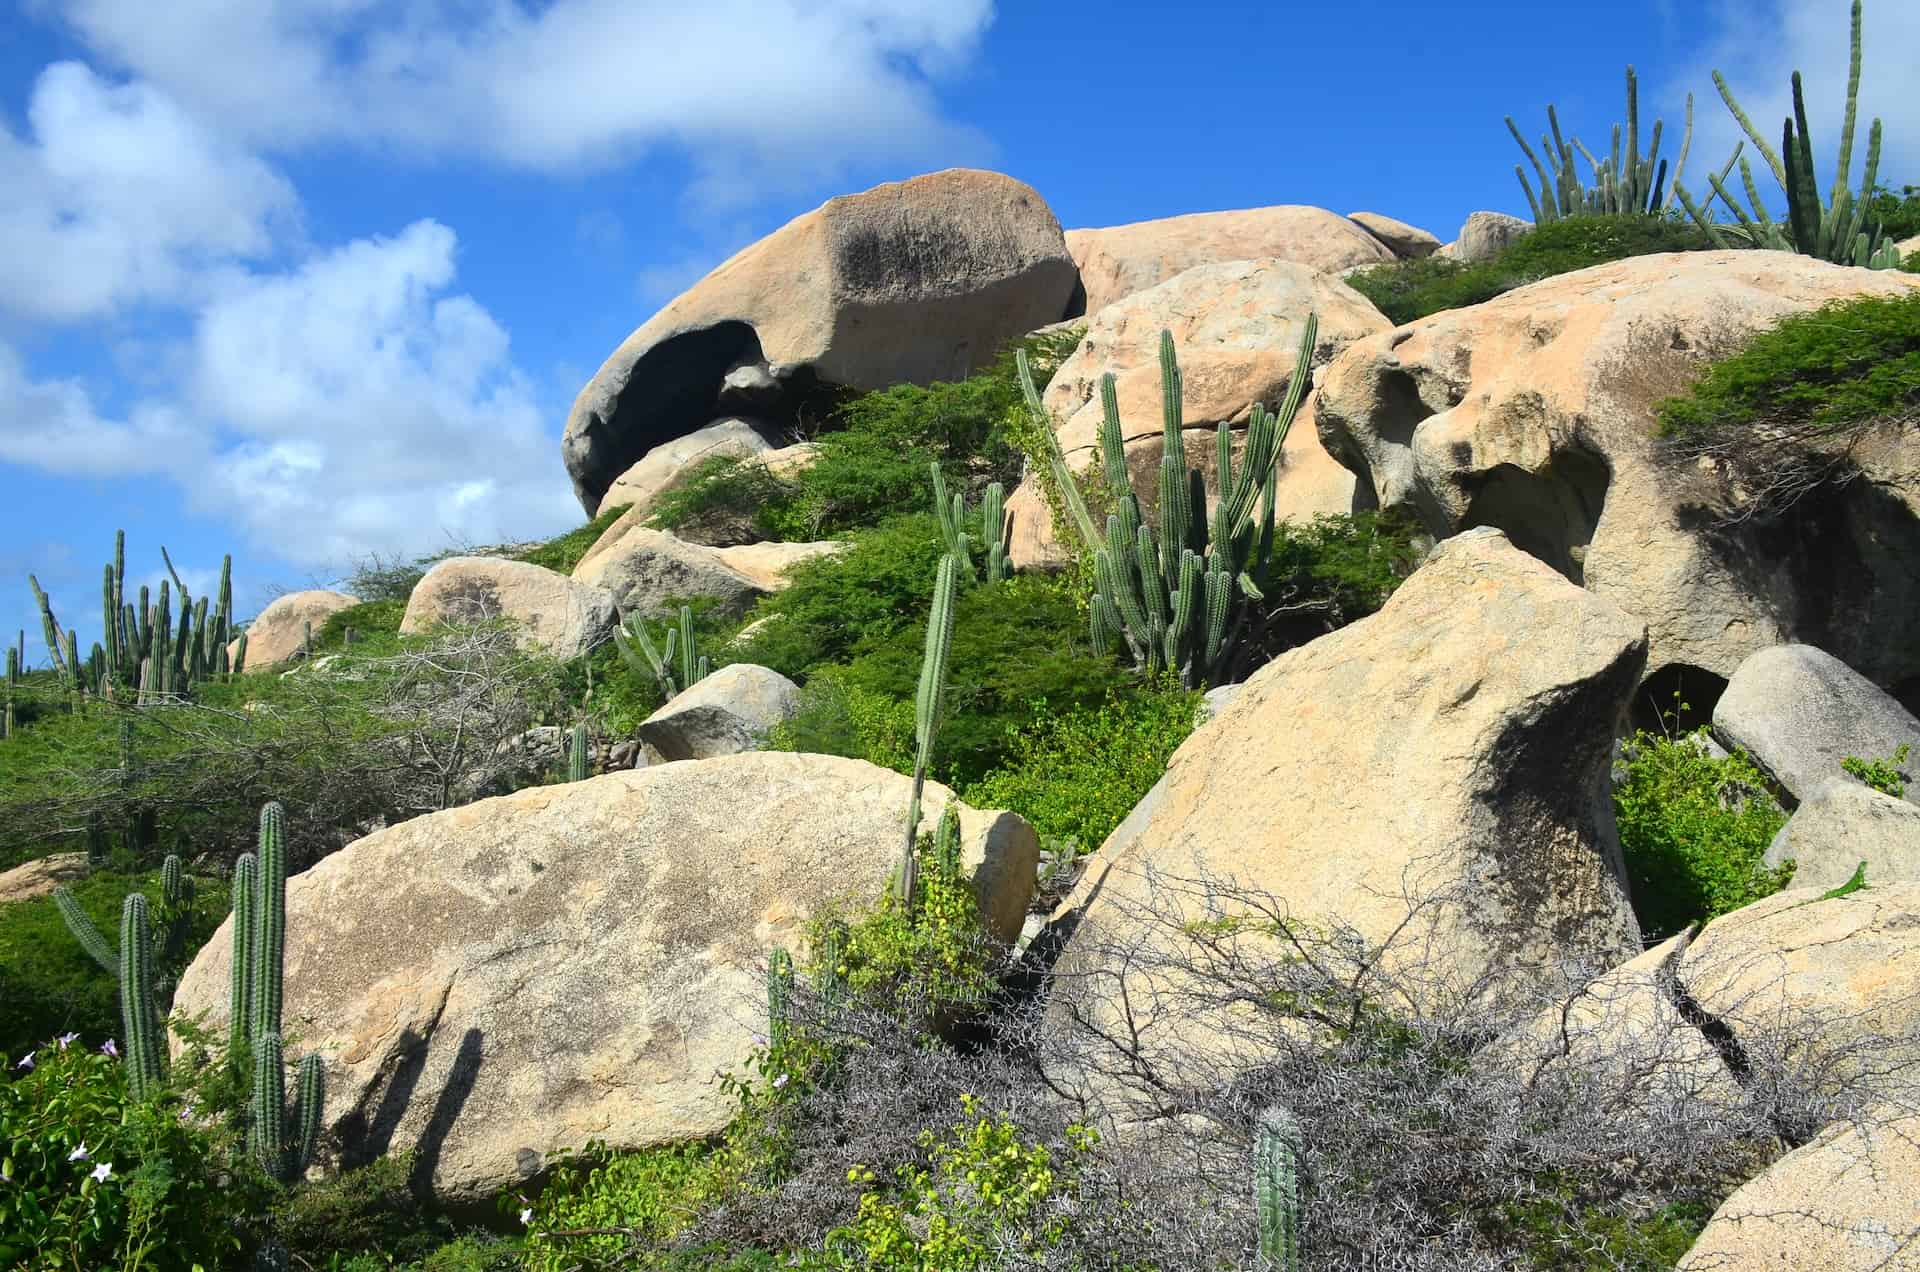 Ayo Rock Formations in Paradera, Aruba